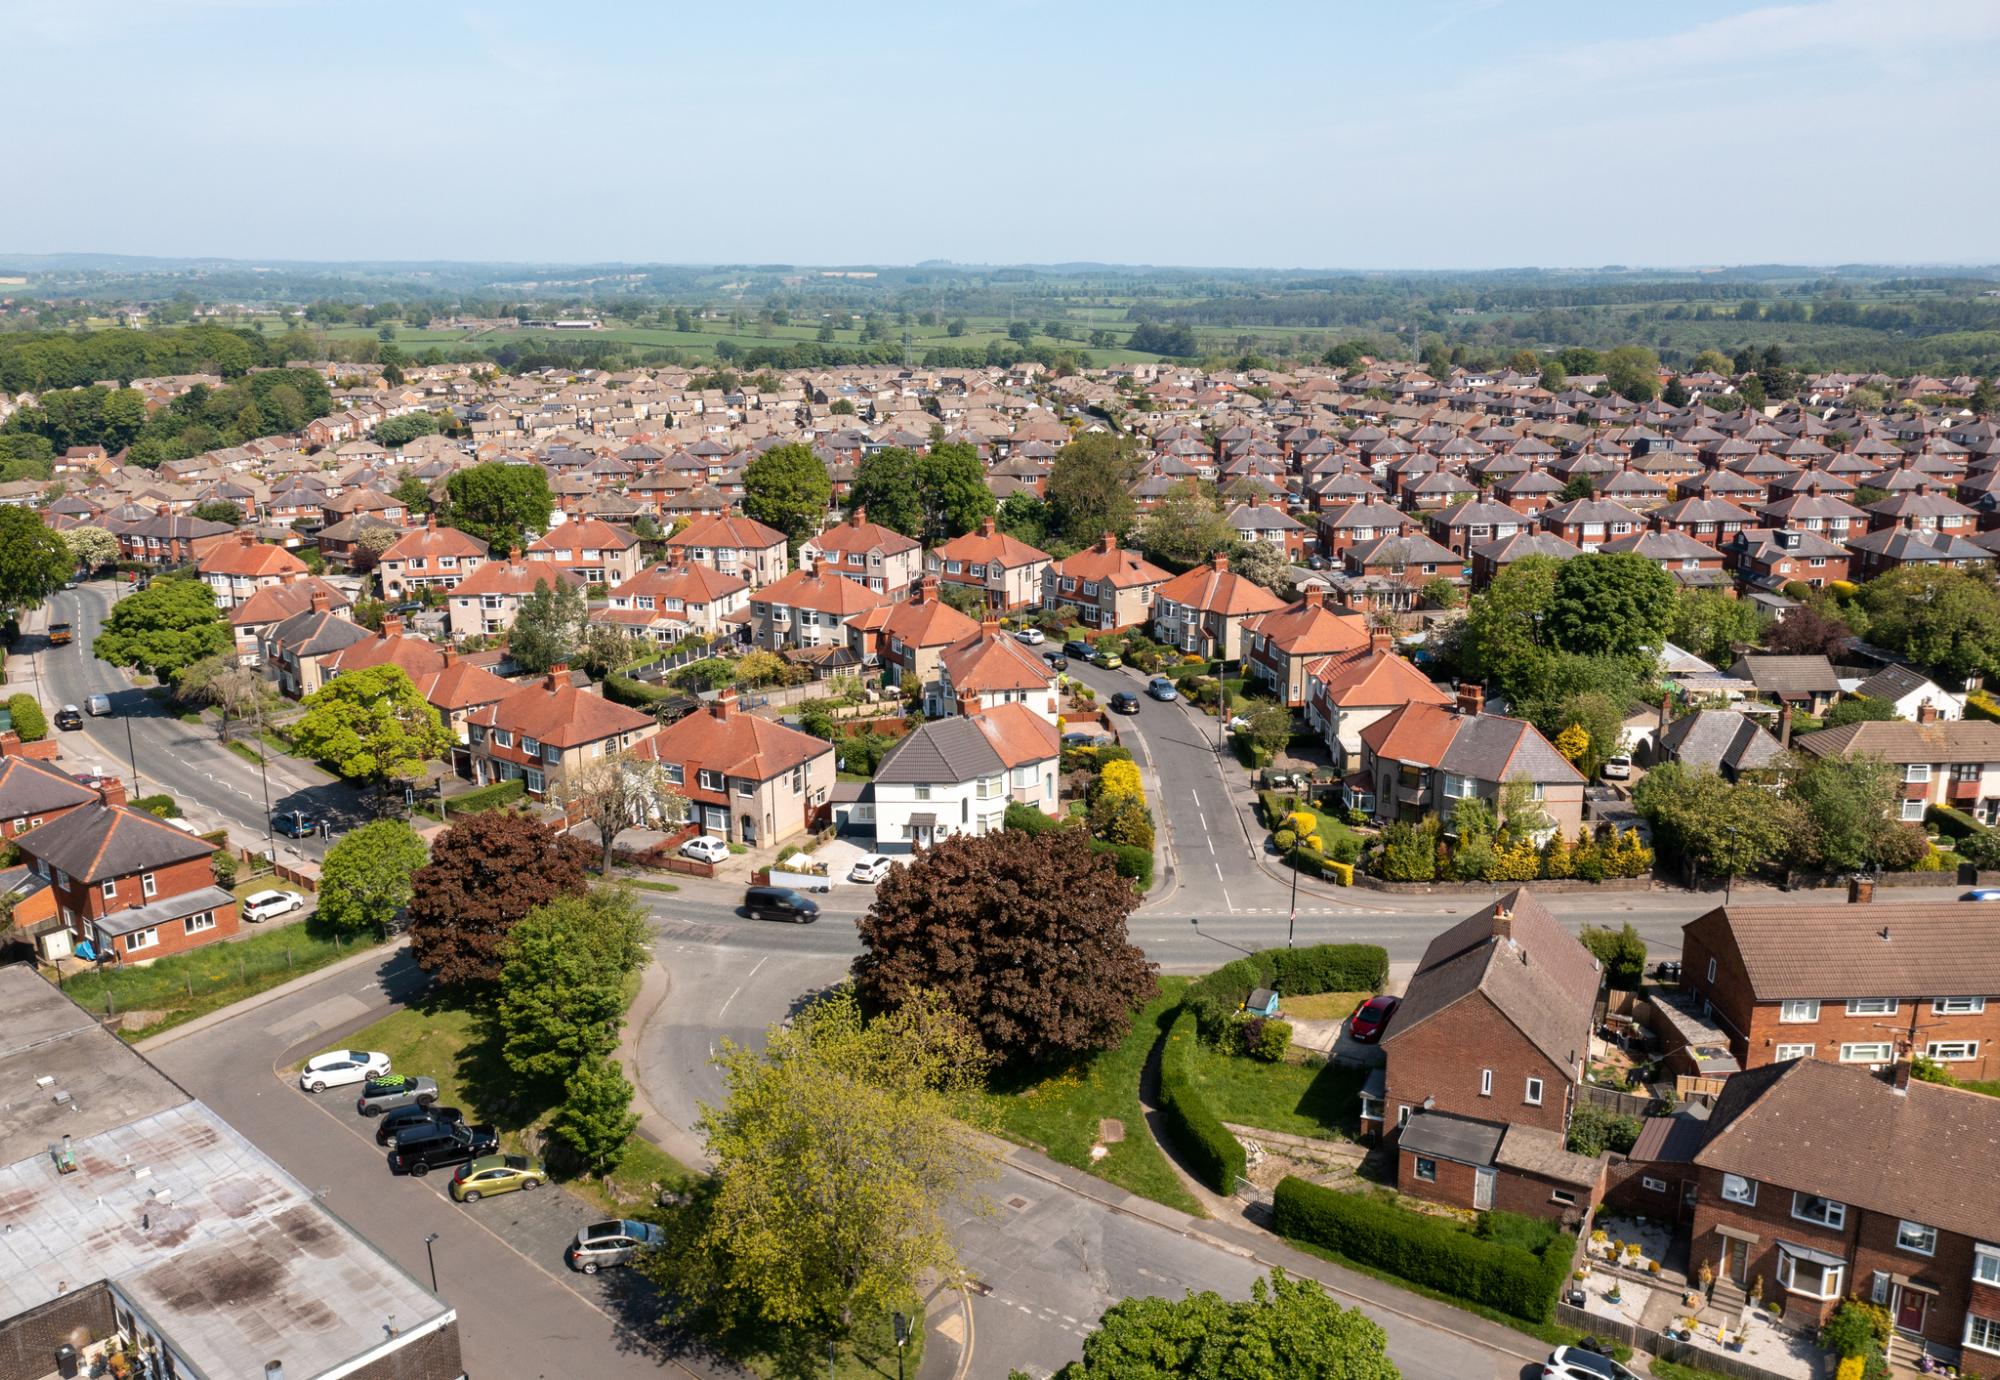 Aerial view of a housing estate in Harrogate